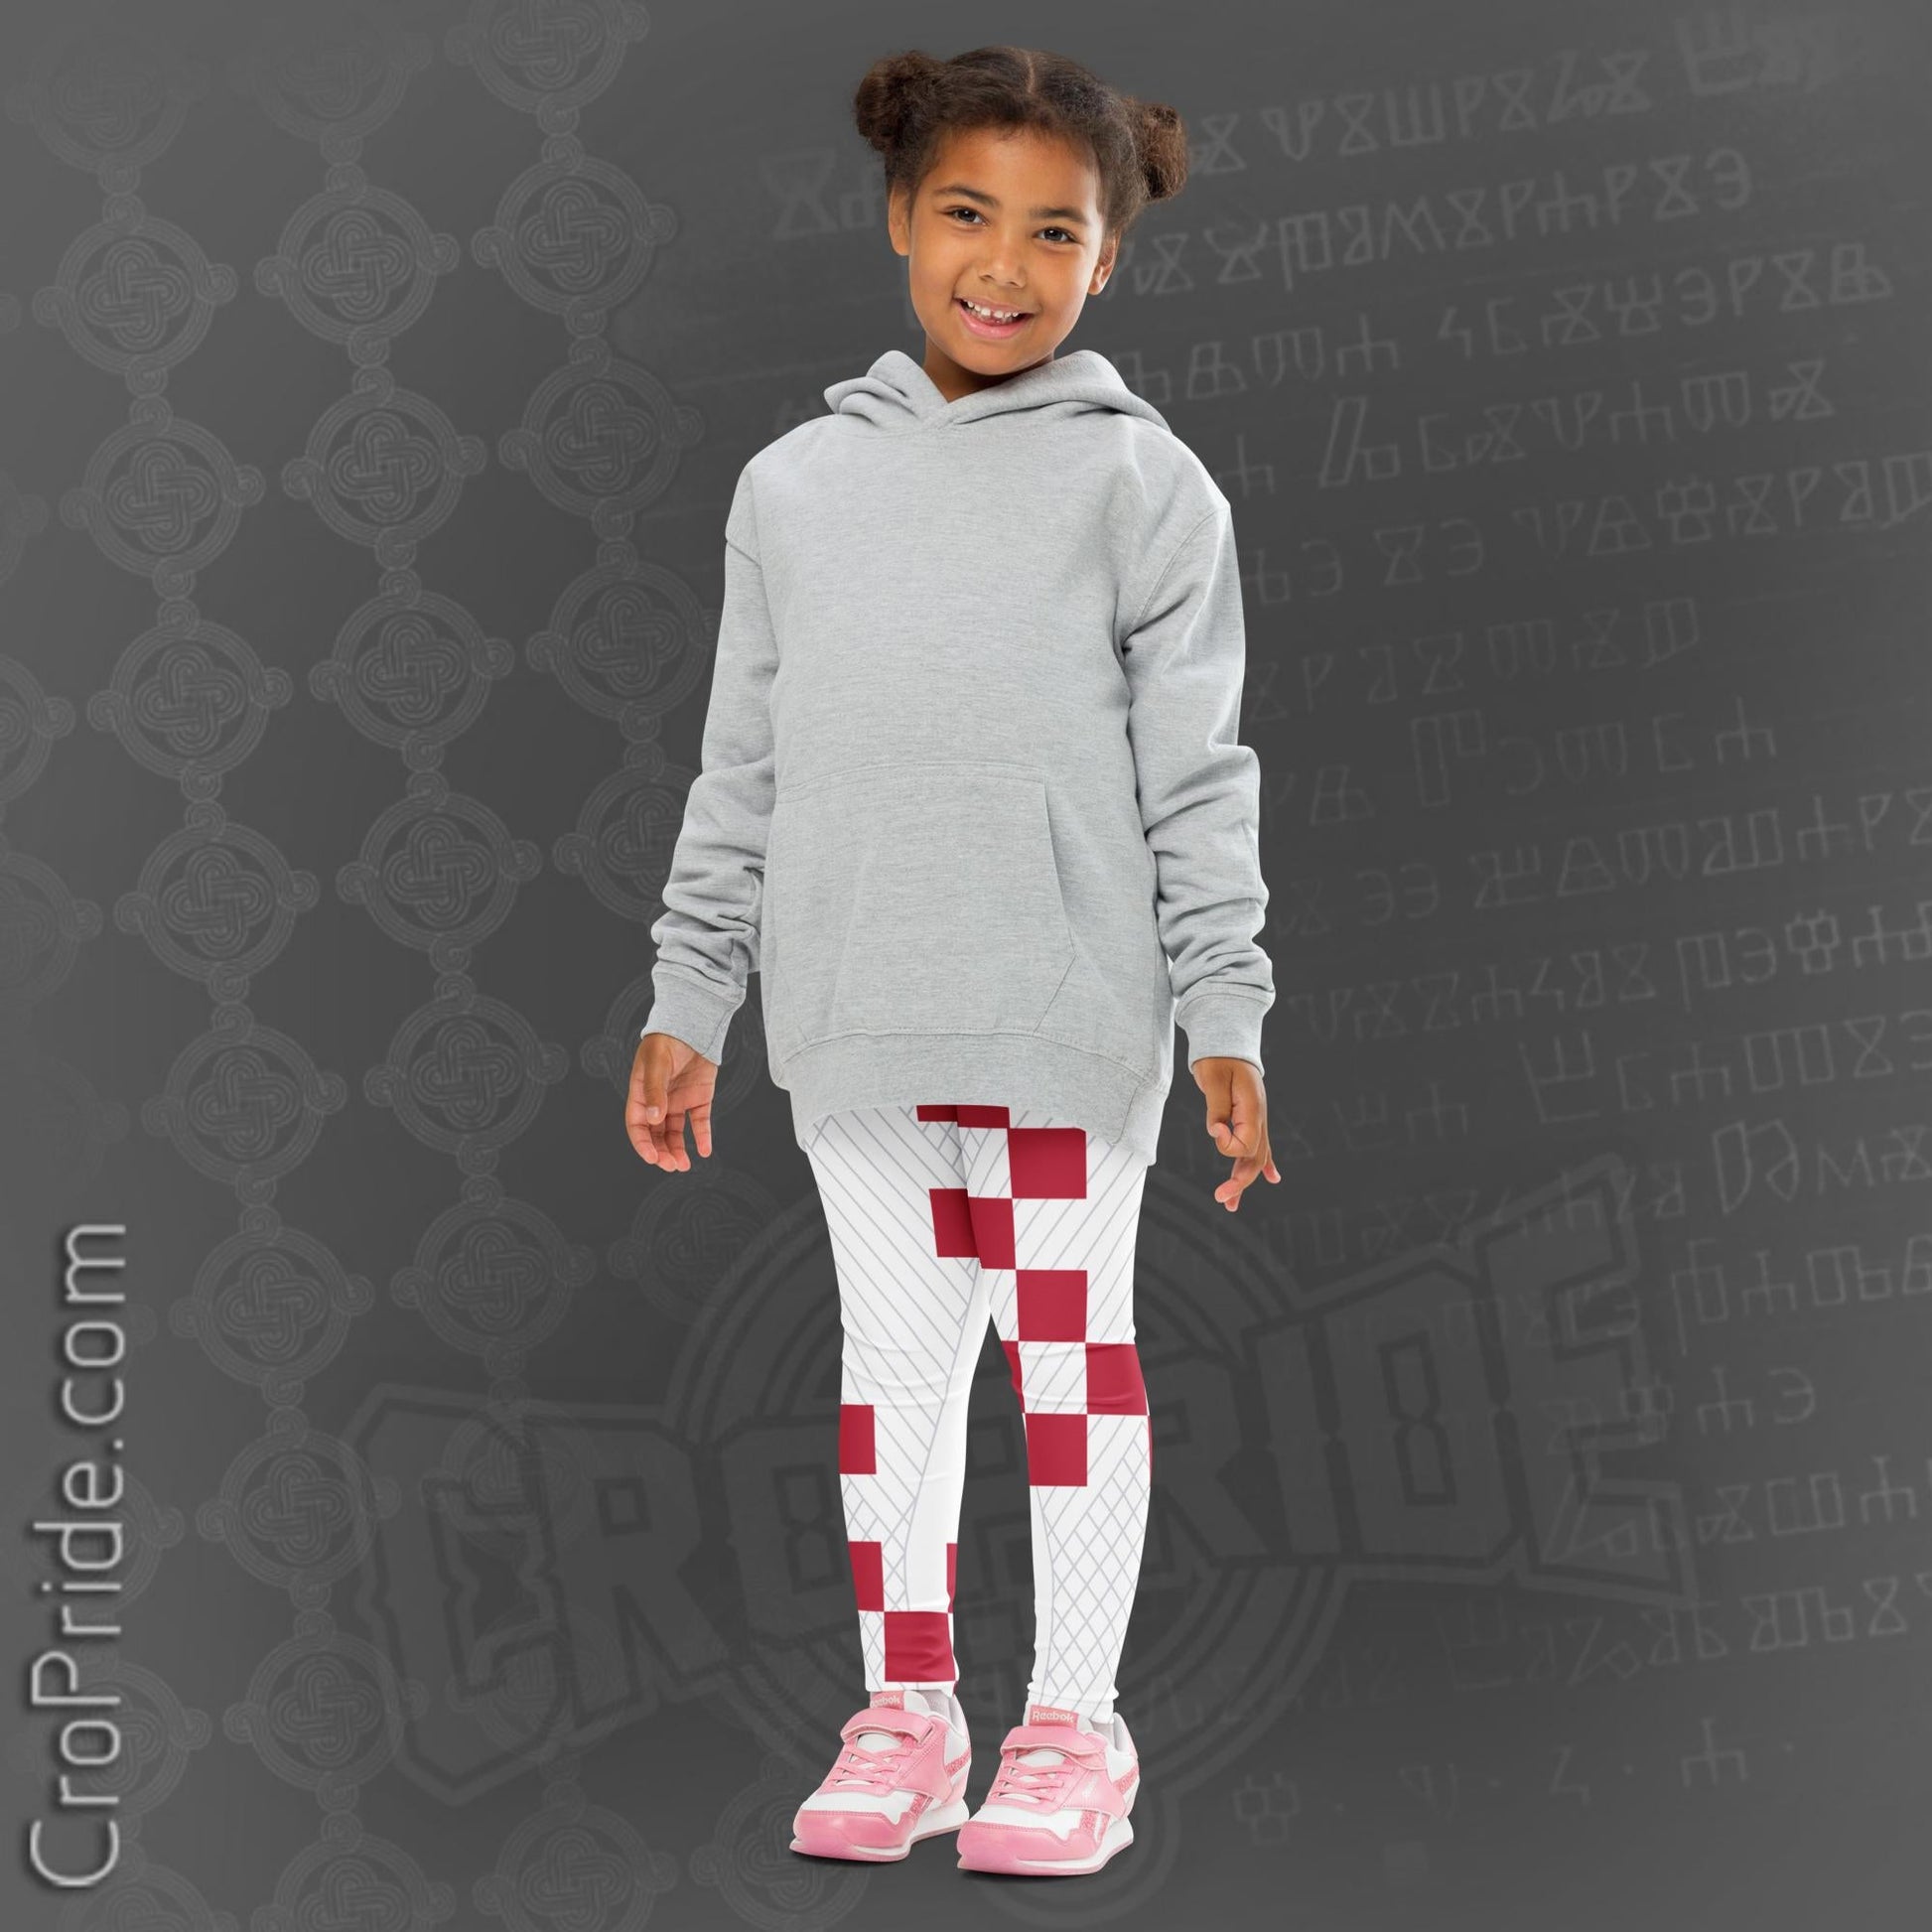 Croatian Checkers Kids Leggings: Comfortable & Vibrant | Sizes 2T-7